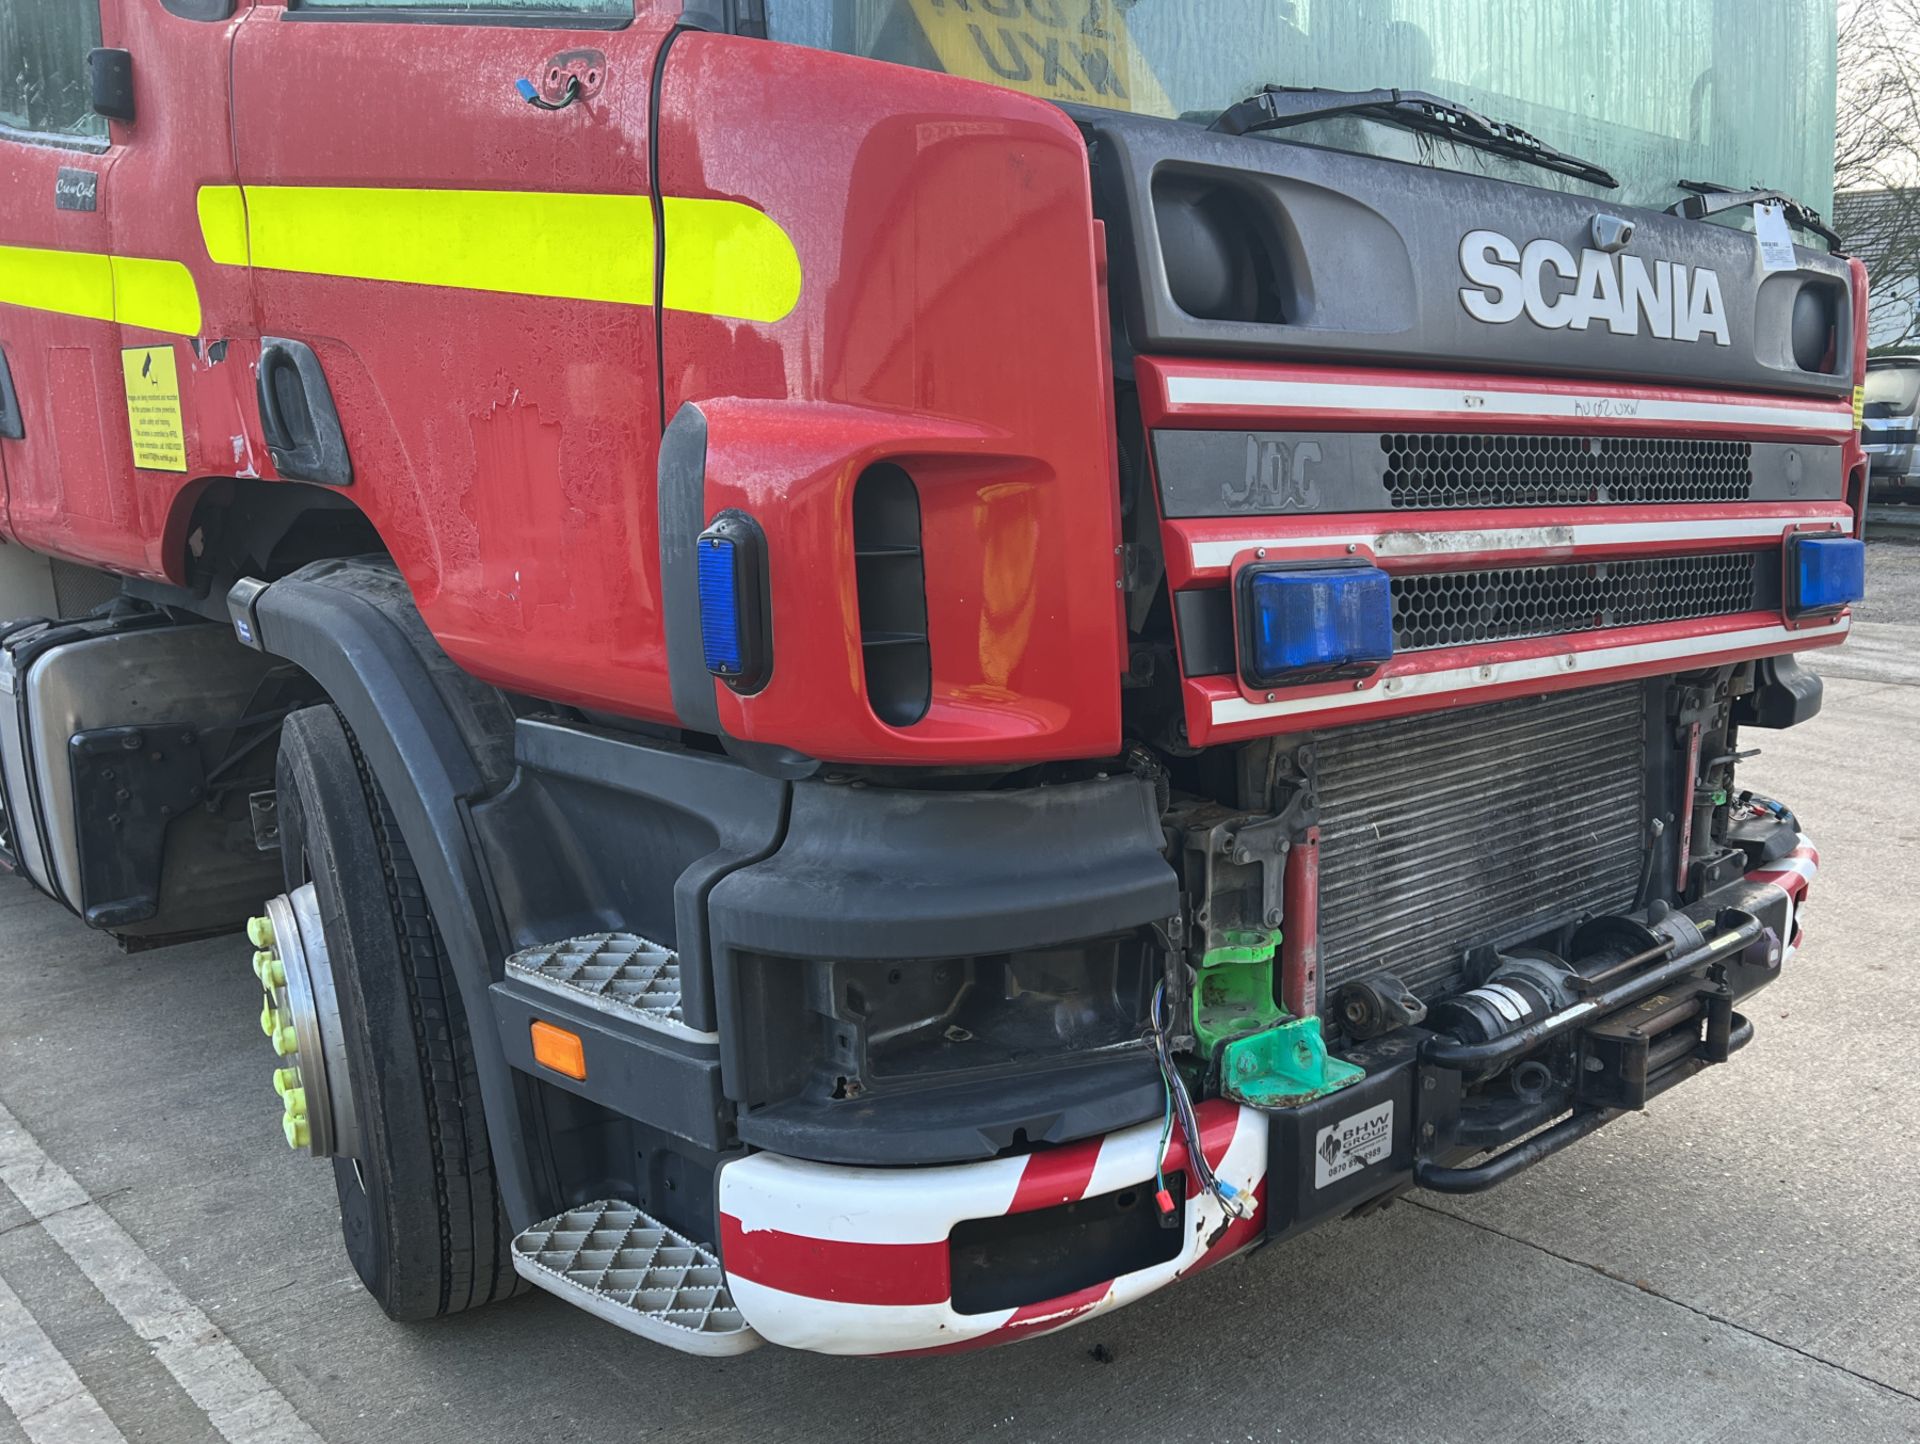 Scania JDC fire engine - 2 axel rigid body - A002 UXW - 230909 km - V5 present - Image 6 of 54